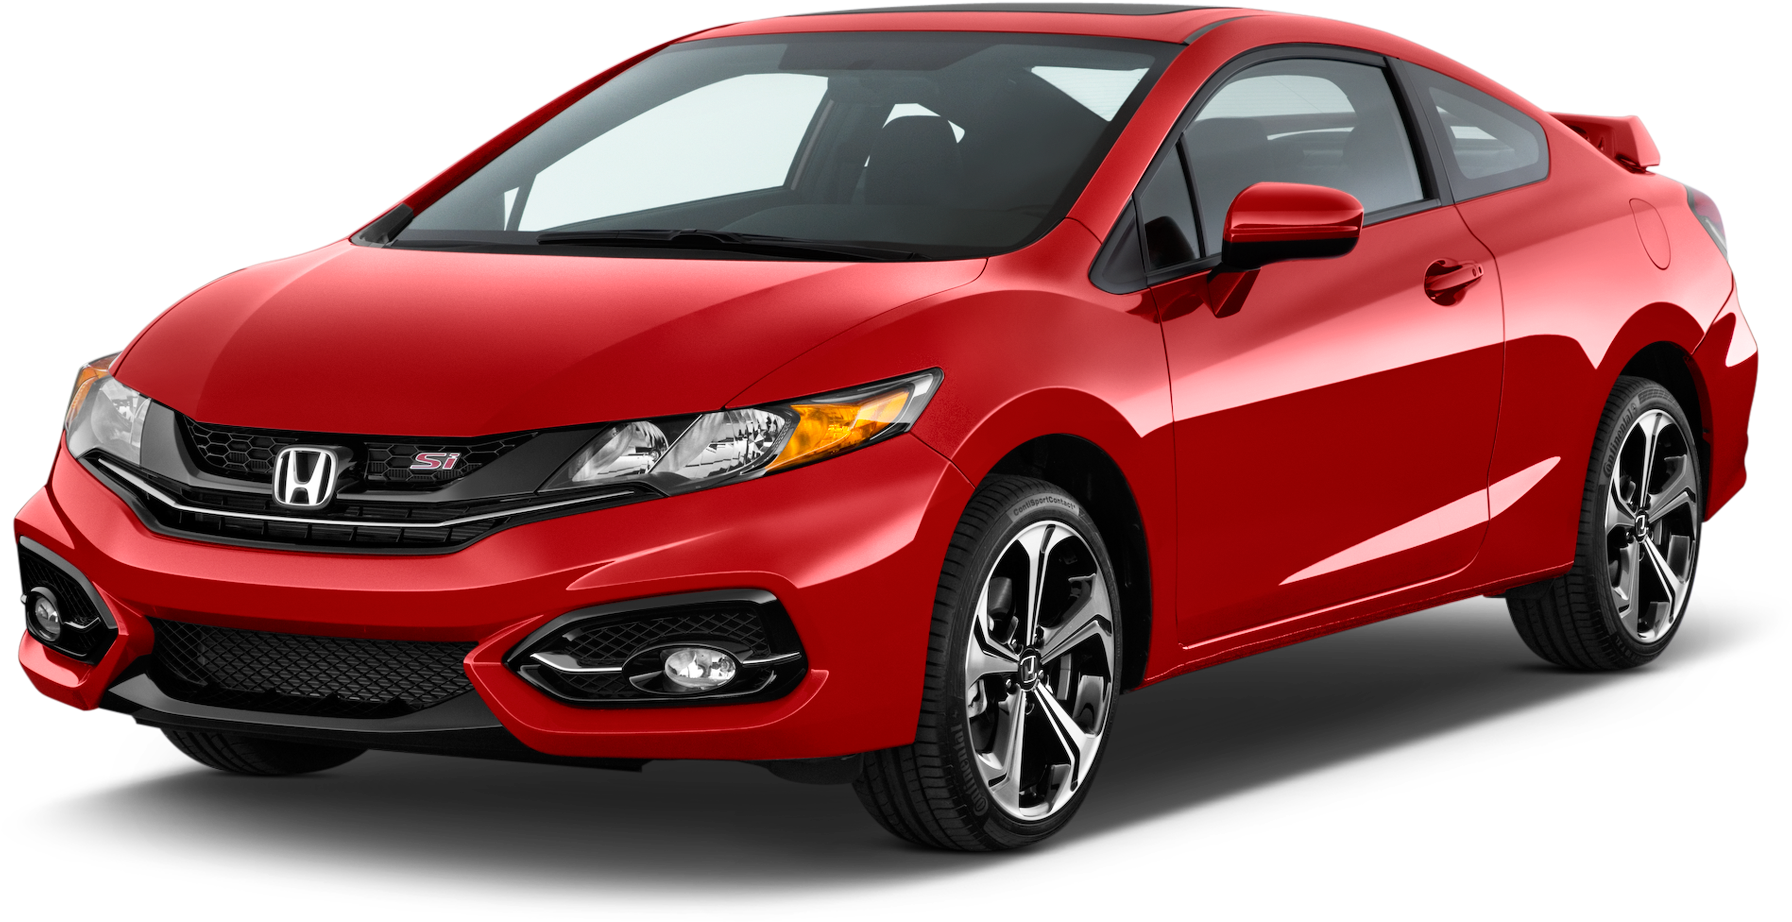 Download Honda Civic Png File New Honda Civic Png Image With No Background Pngkey Com